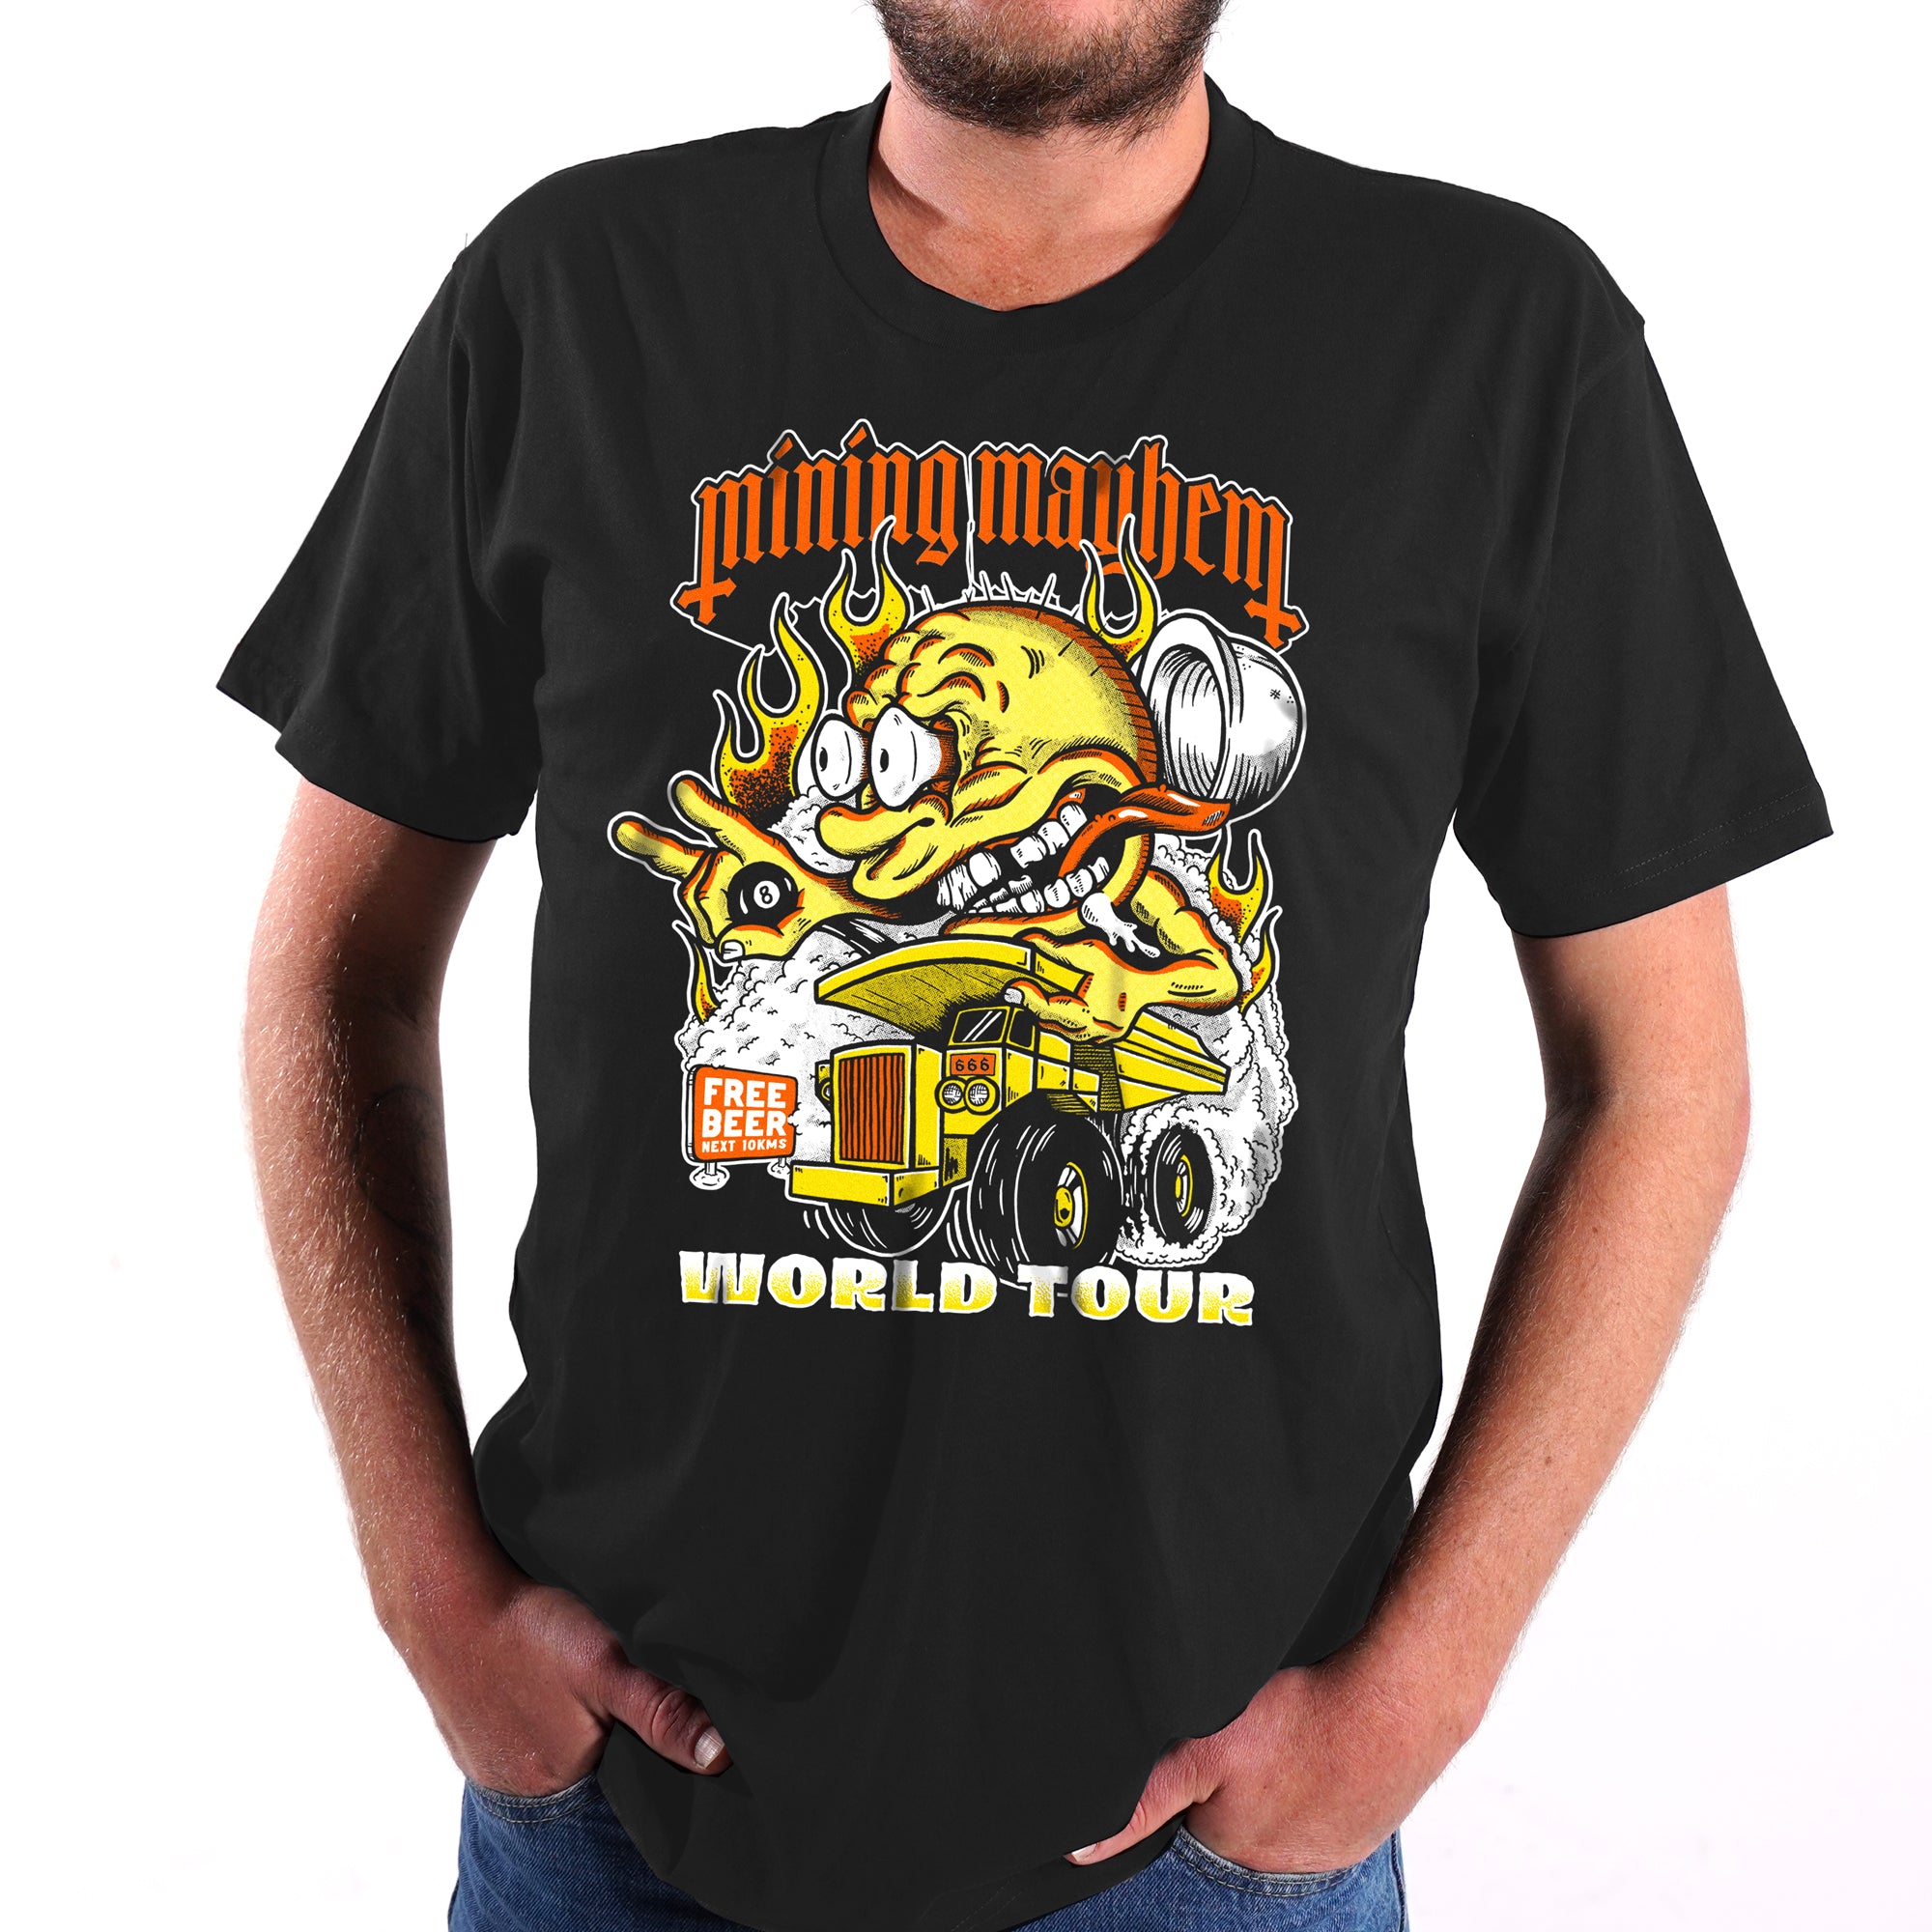 Mining Mayhem WORLD TOUR 🤘 - T-Shirt (Coal)